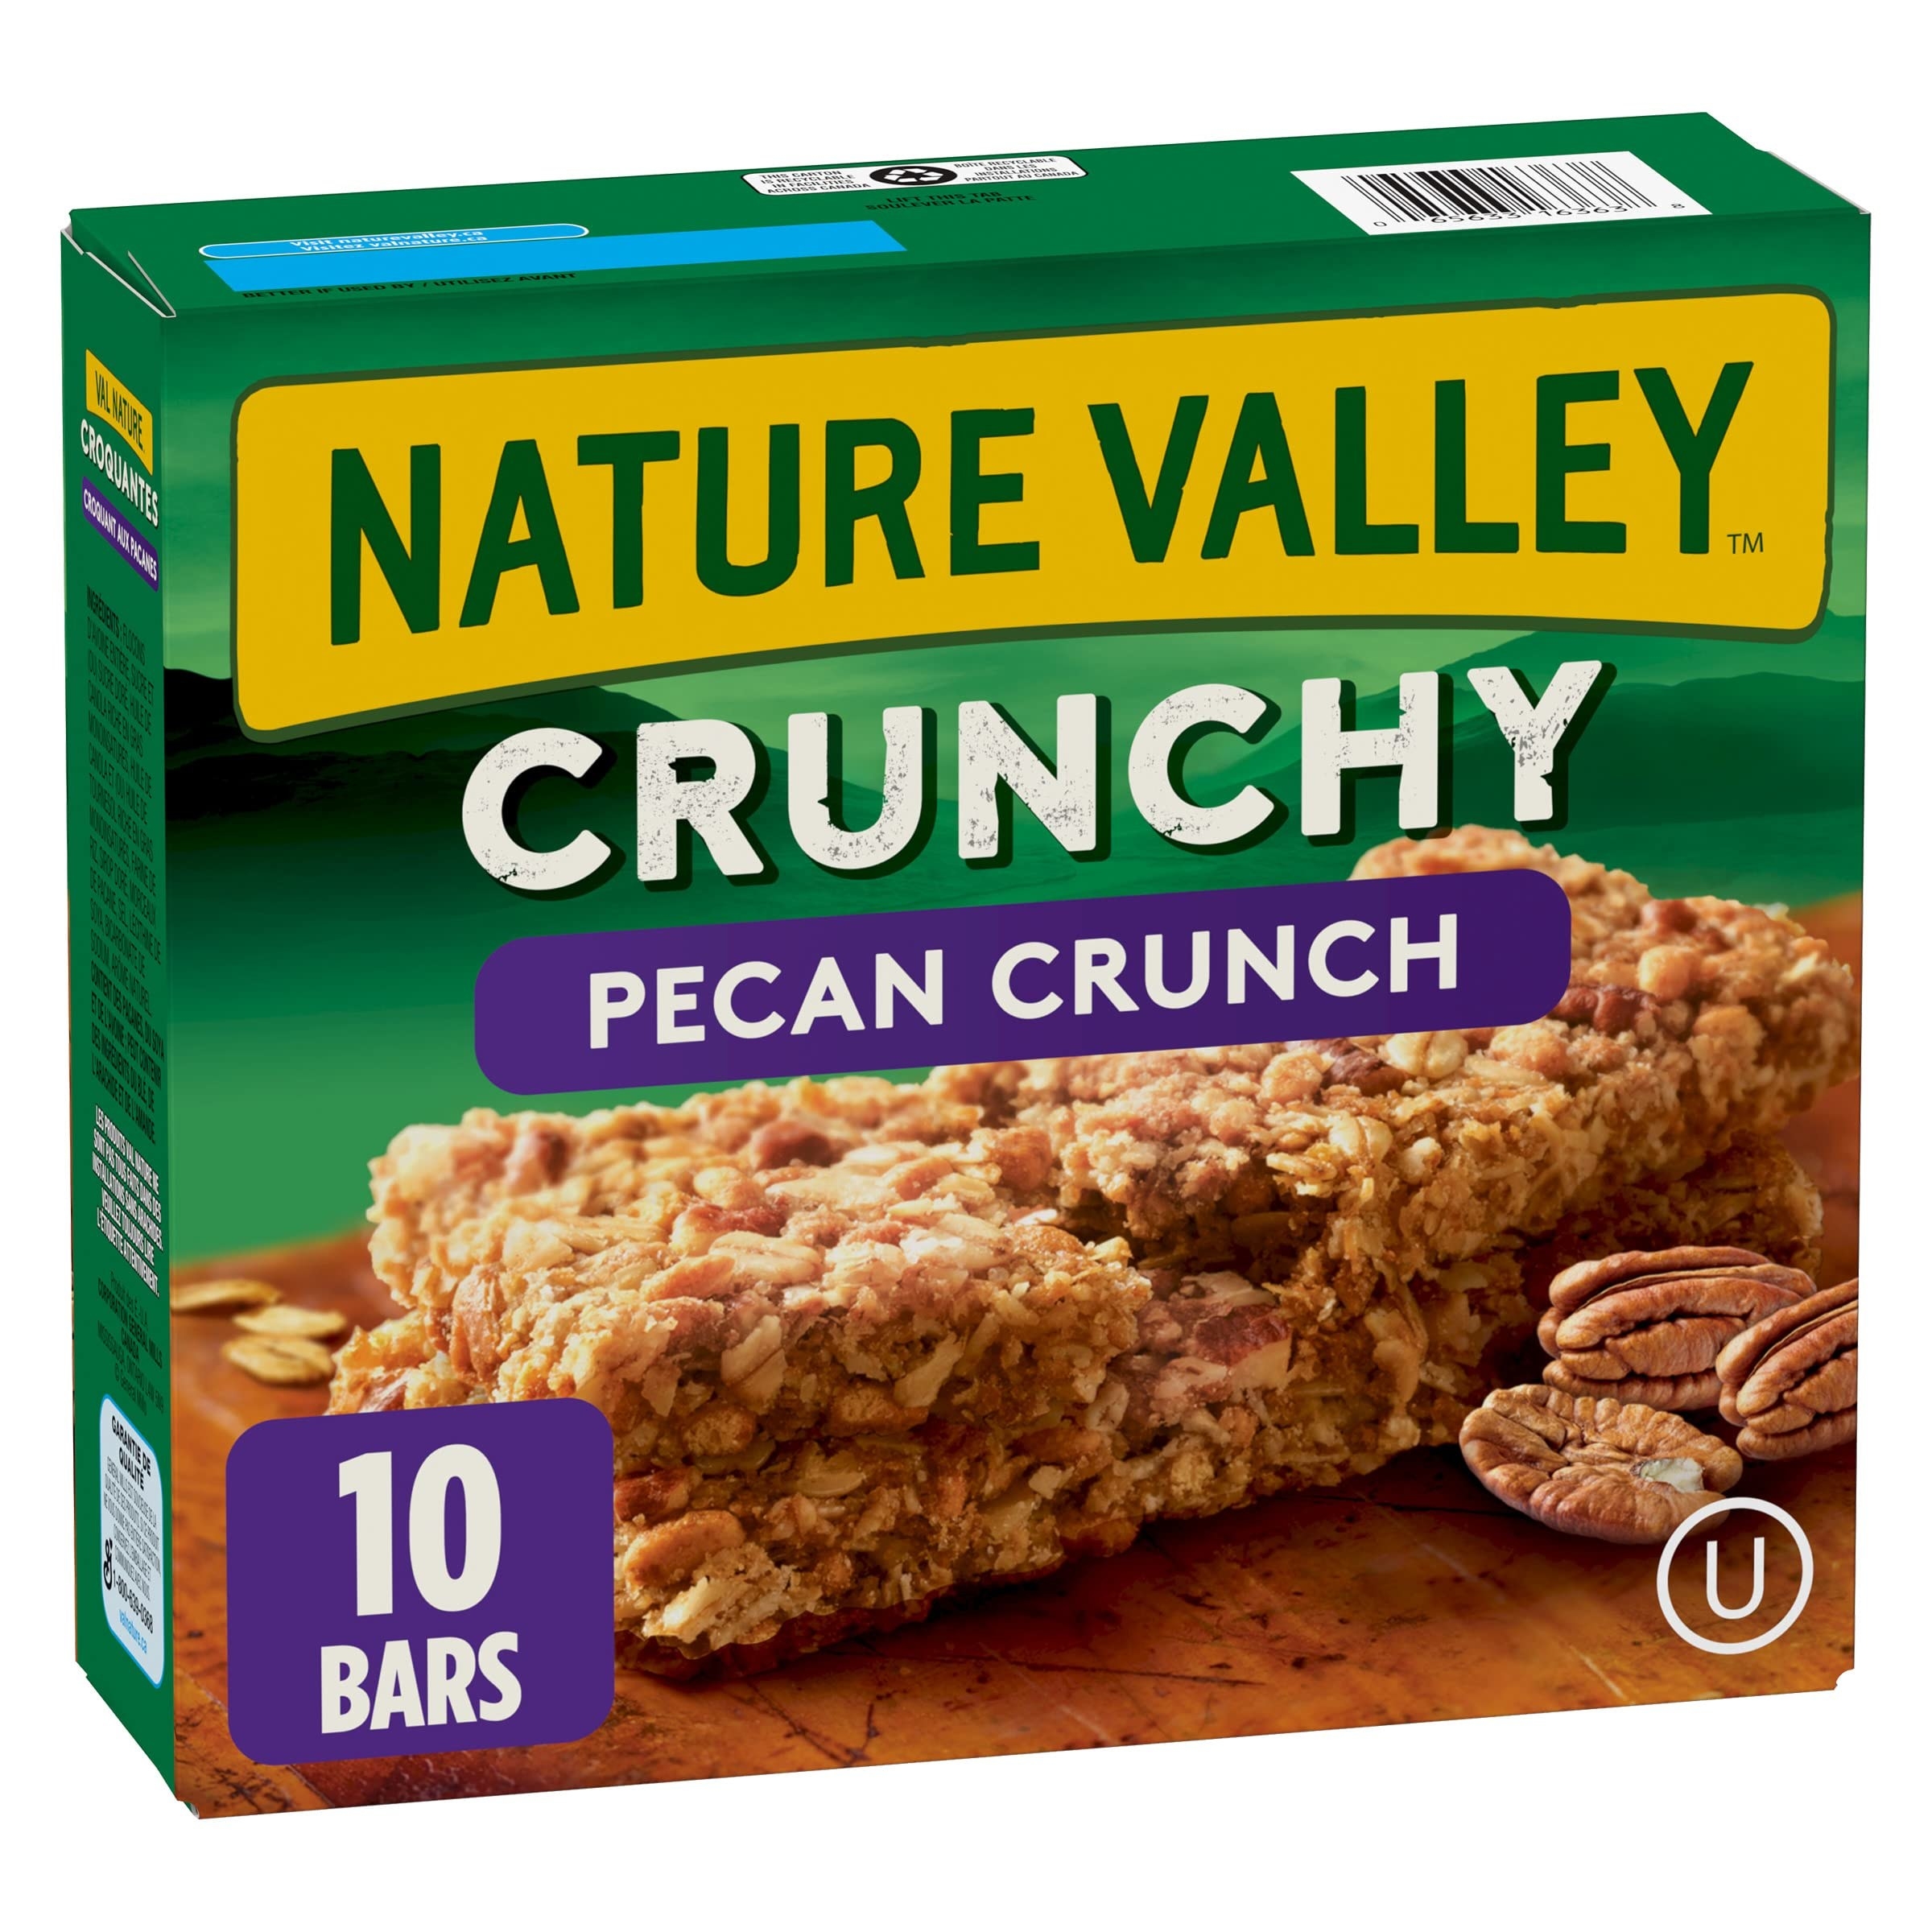 Nature Valley granola bars